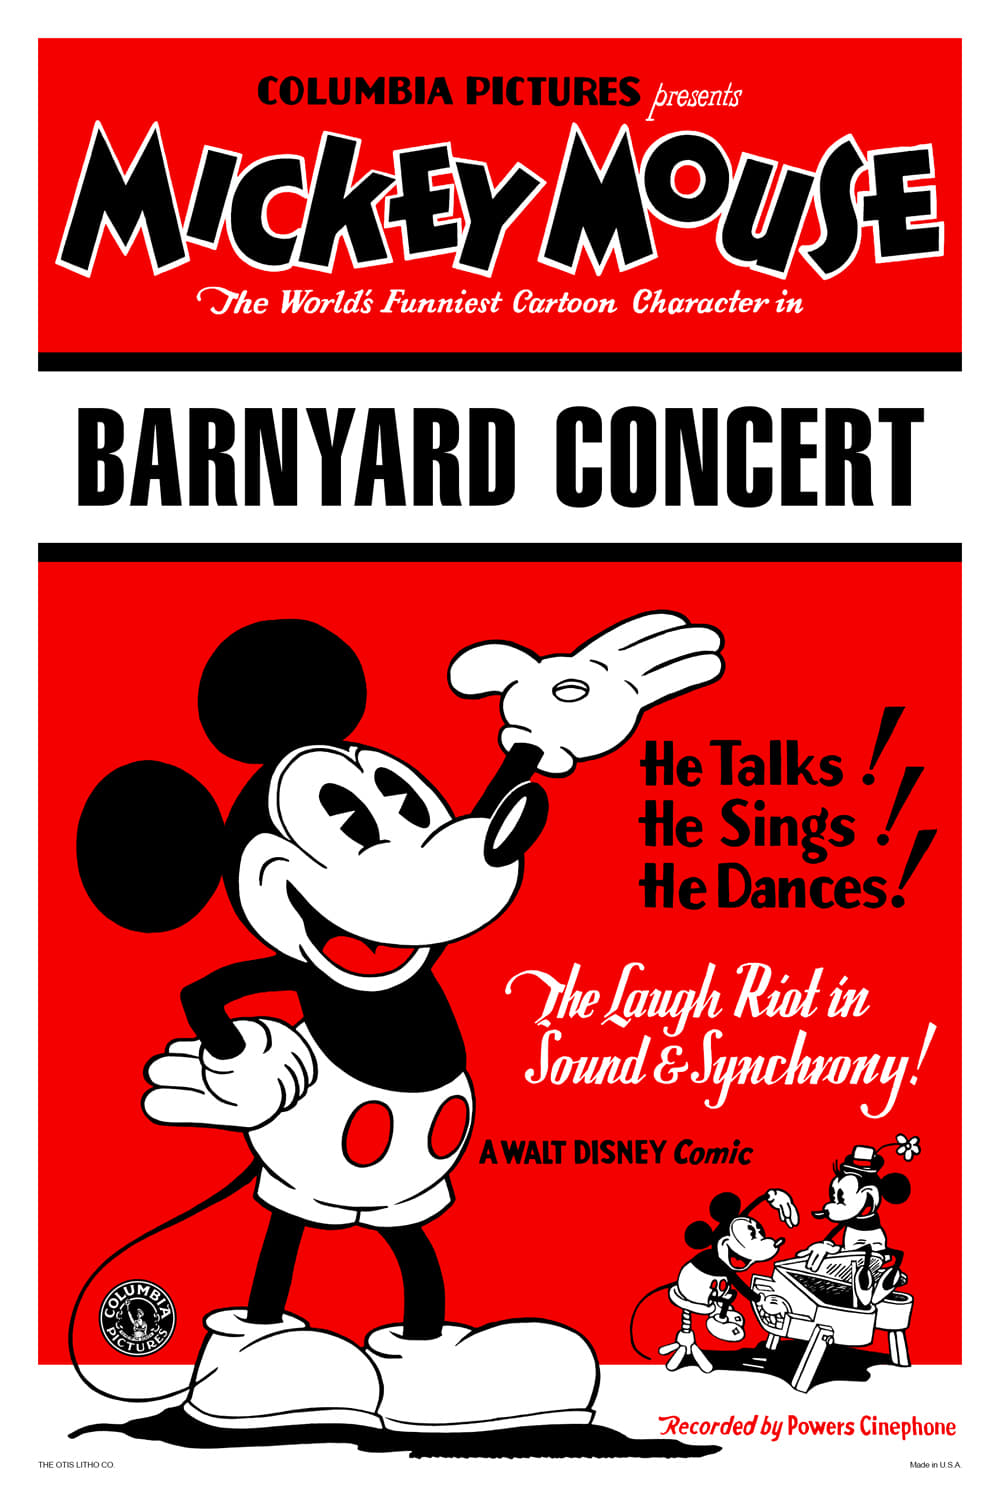 The Barnyard Concert (1930)